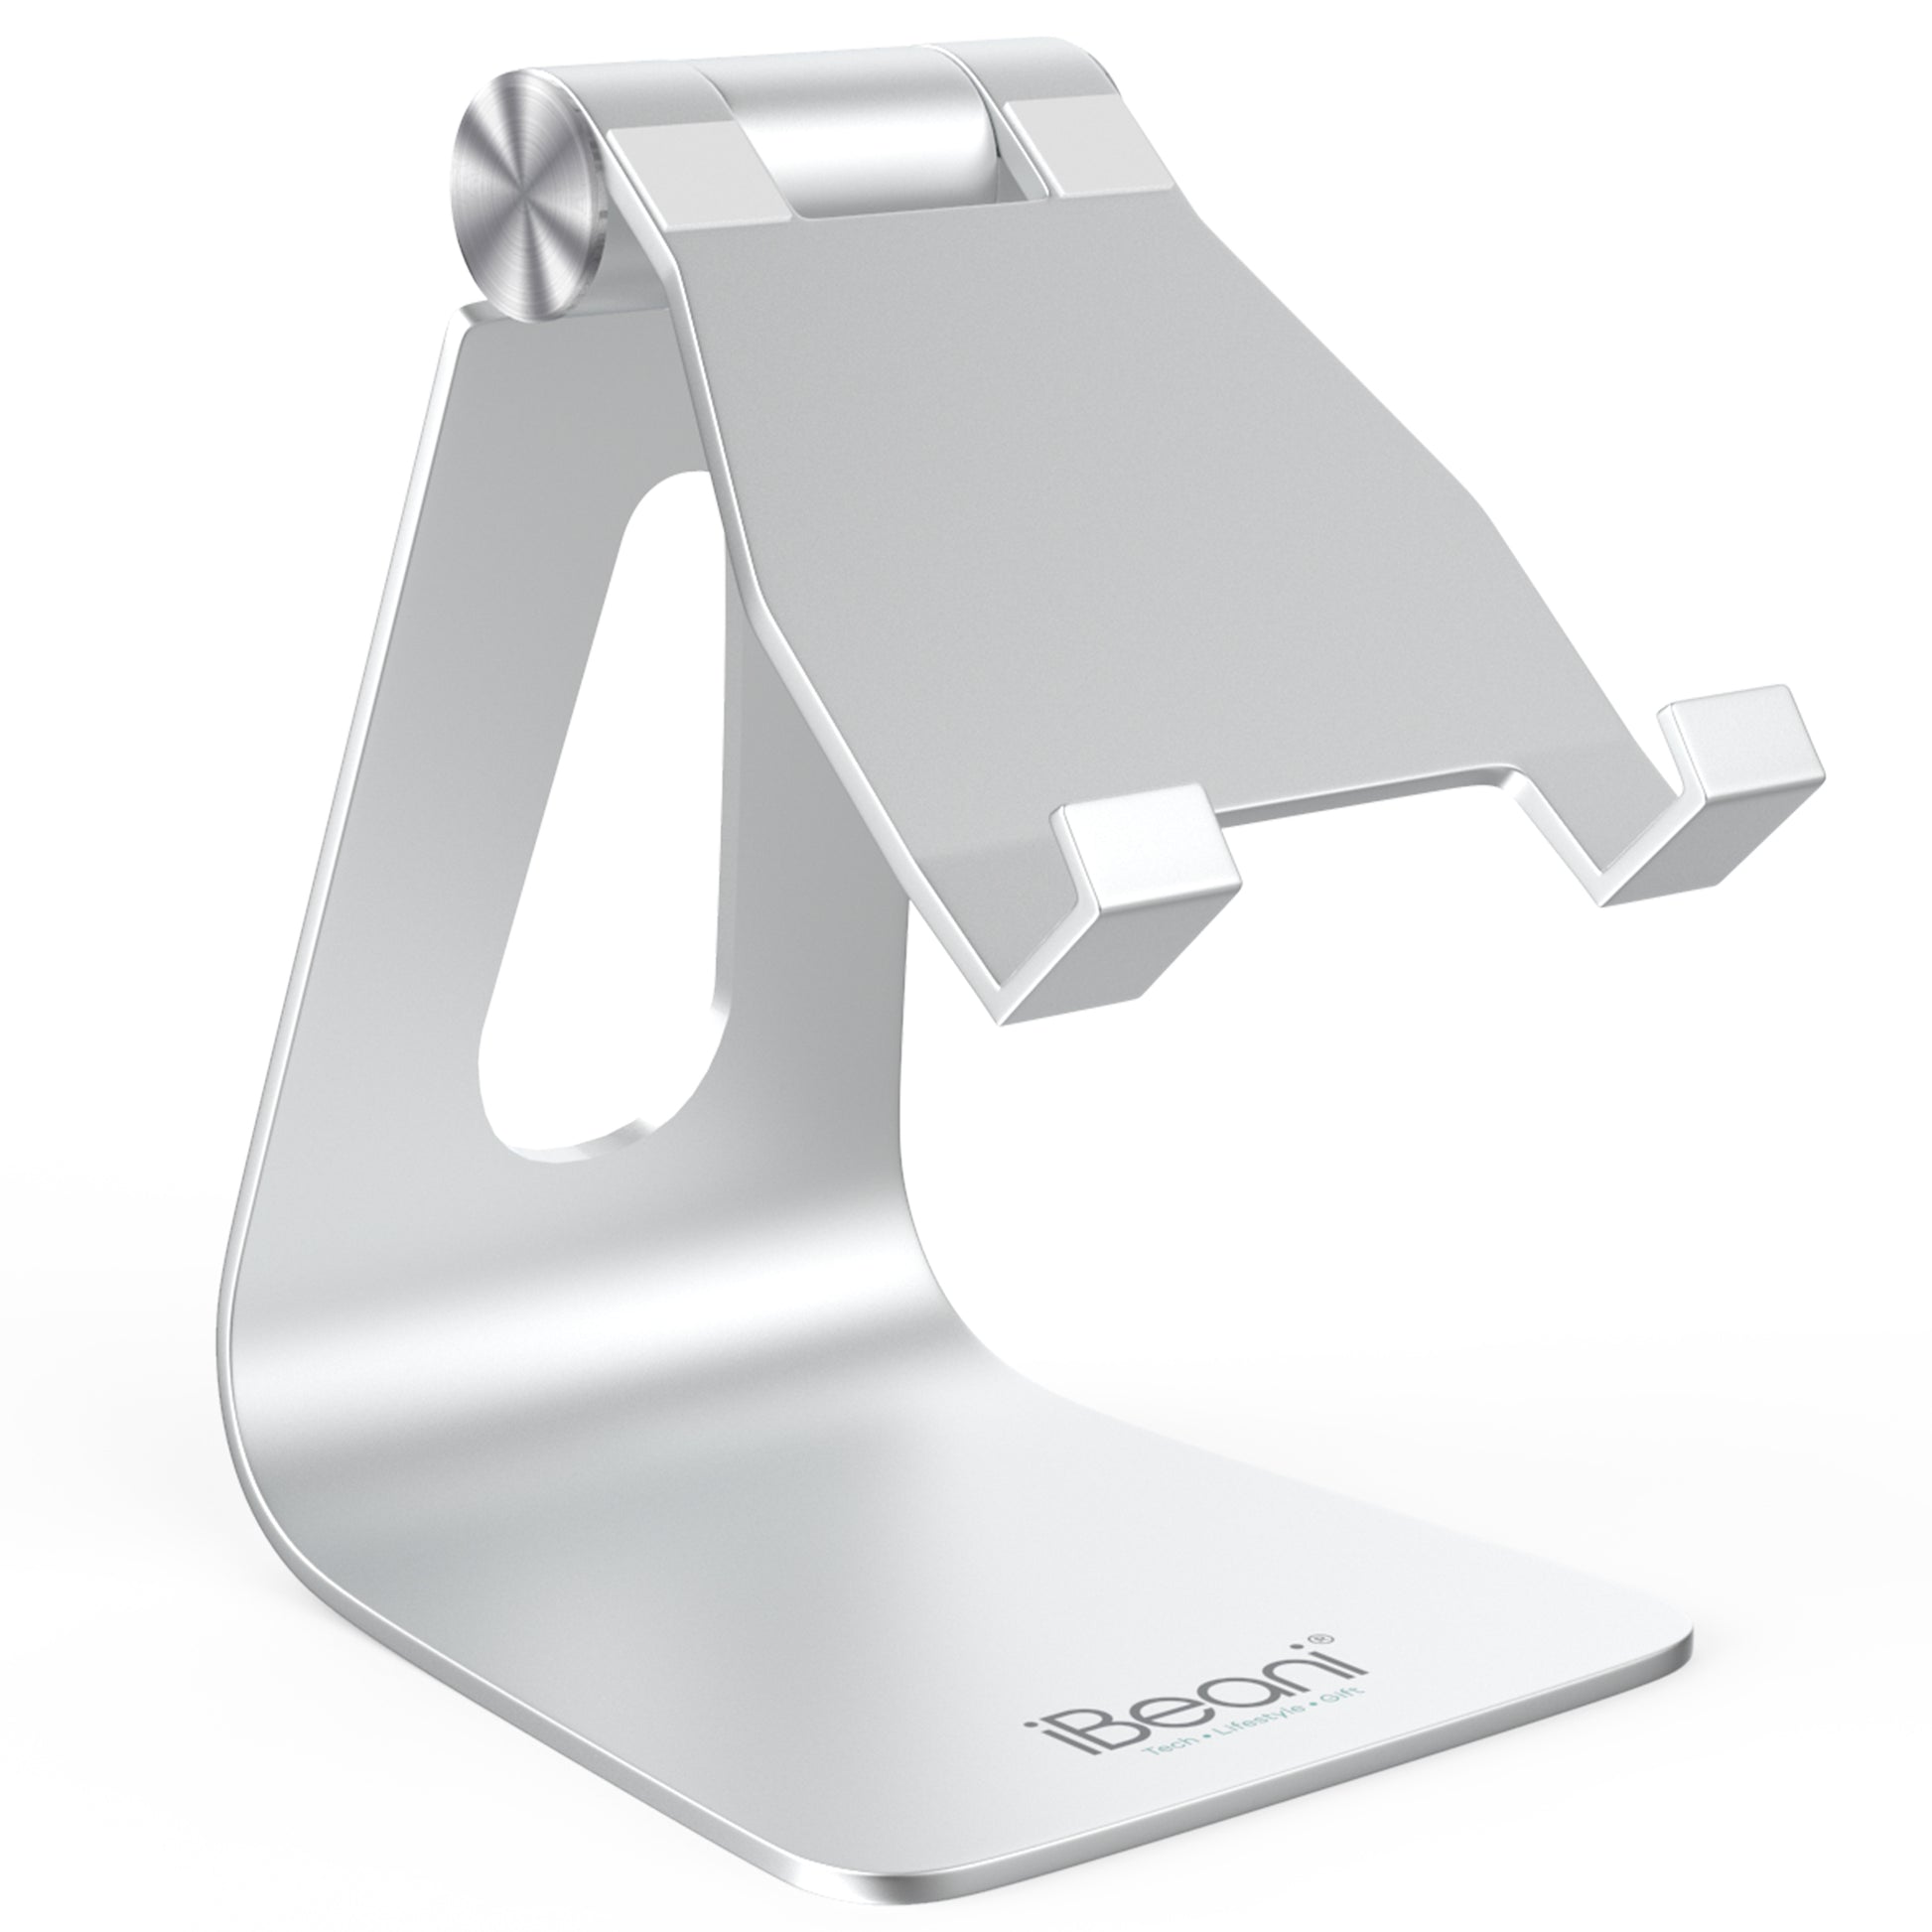 Gritin Phone Stand, Adjustable Phone Holder Stand Dock - Full Aluminum  Desktop Holder Stand for iPhone15, 14